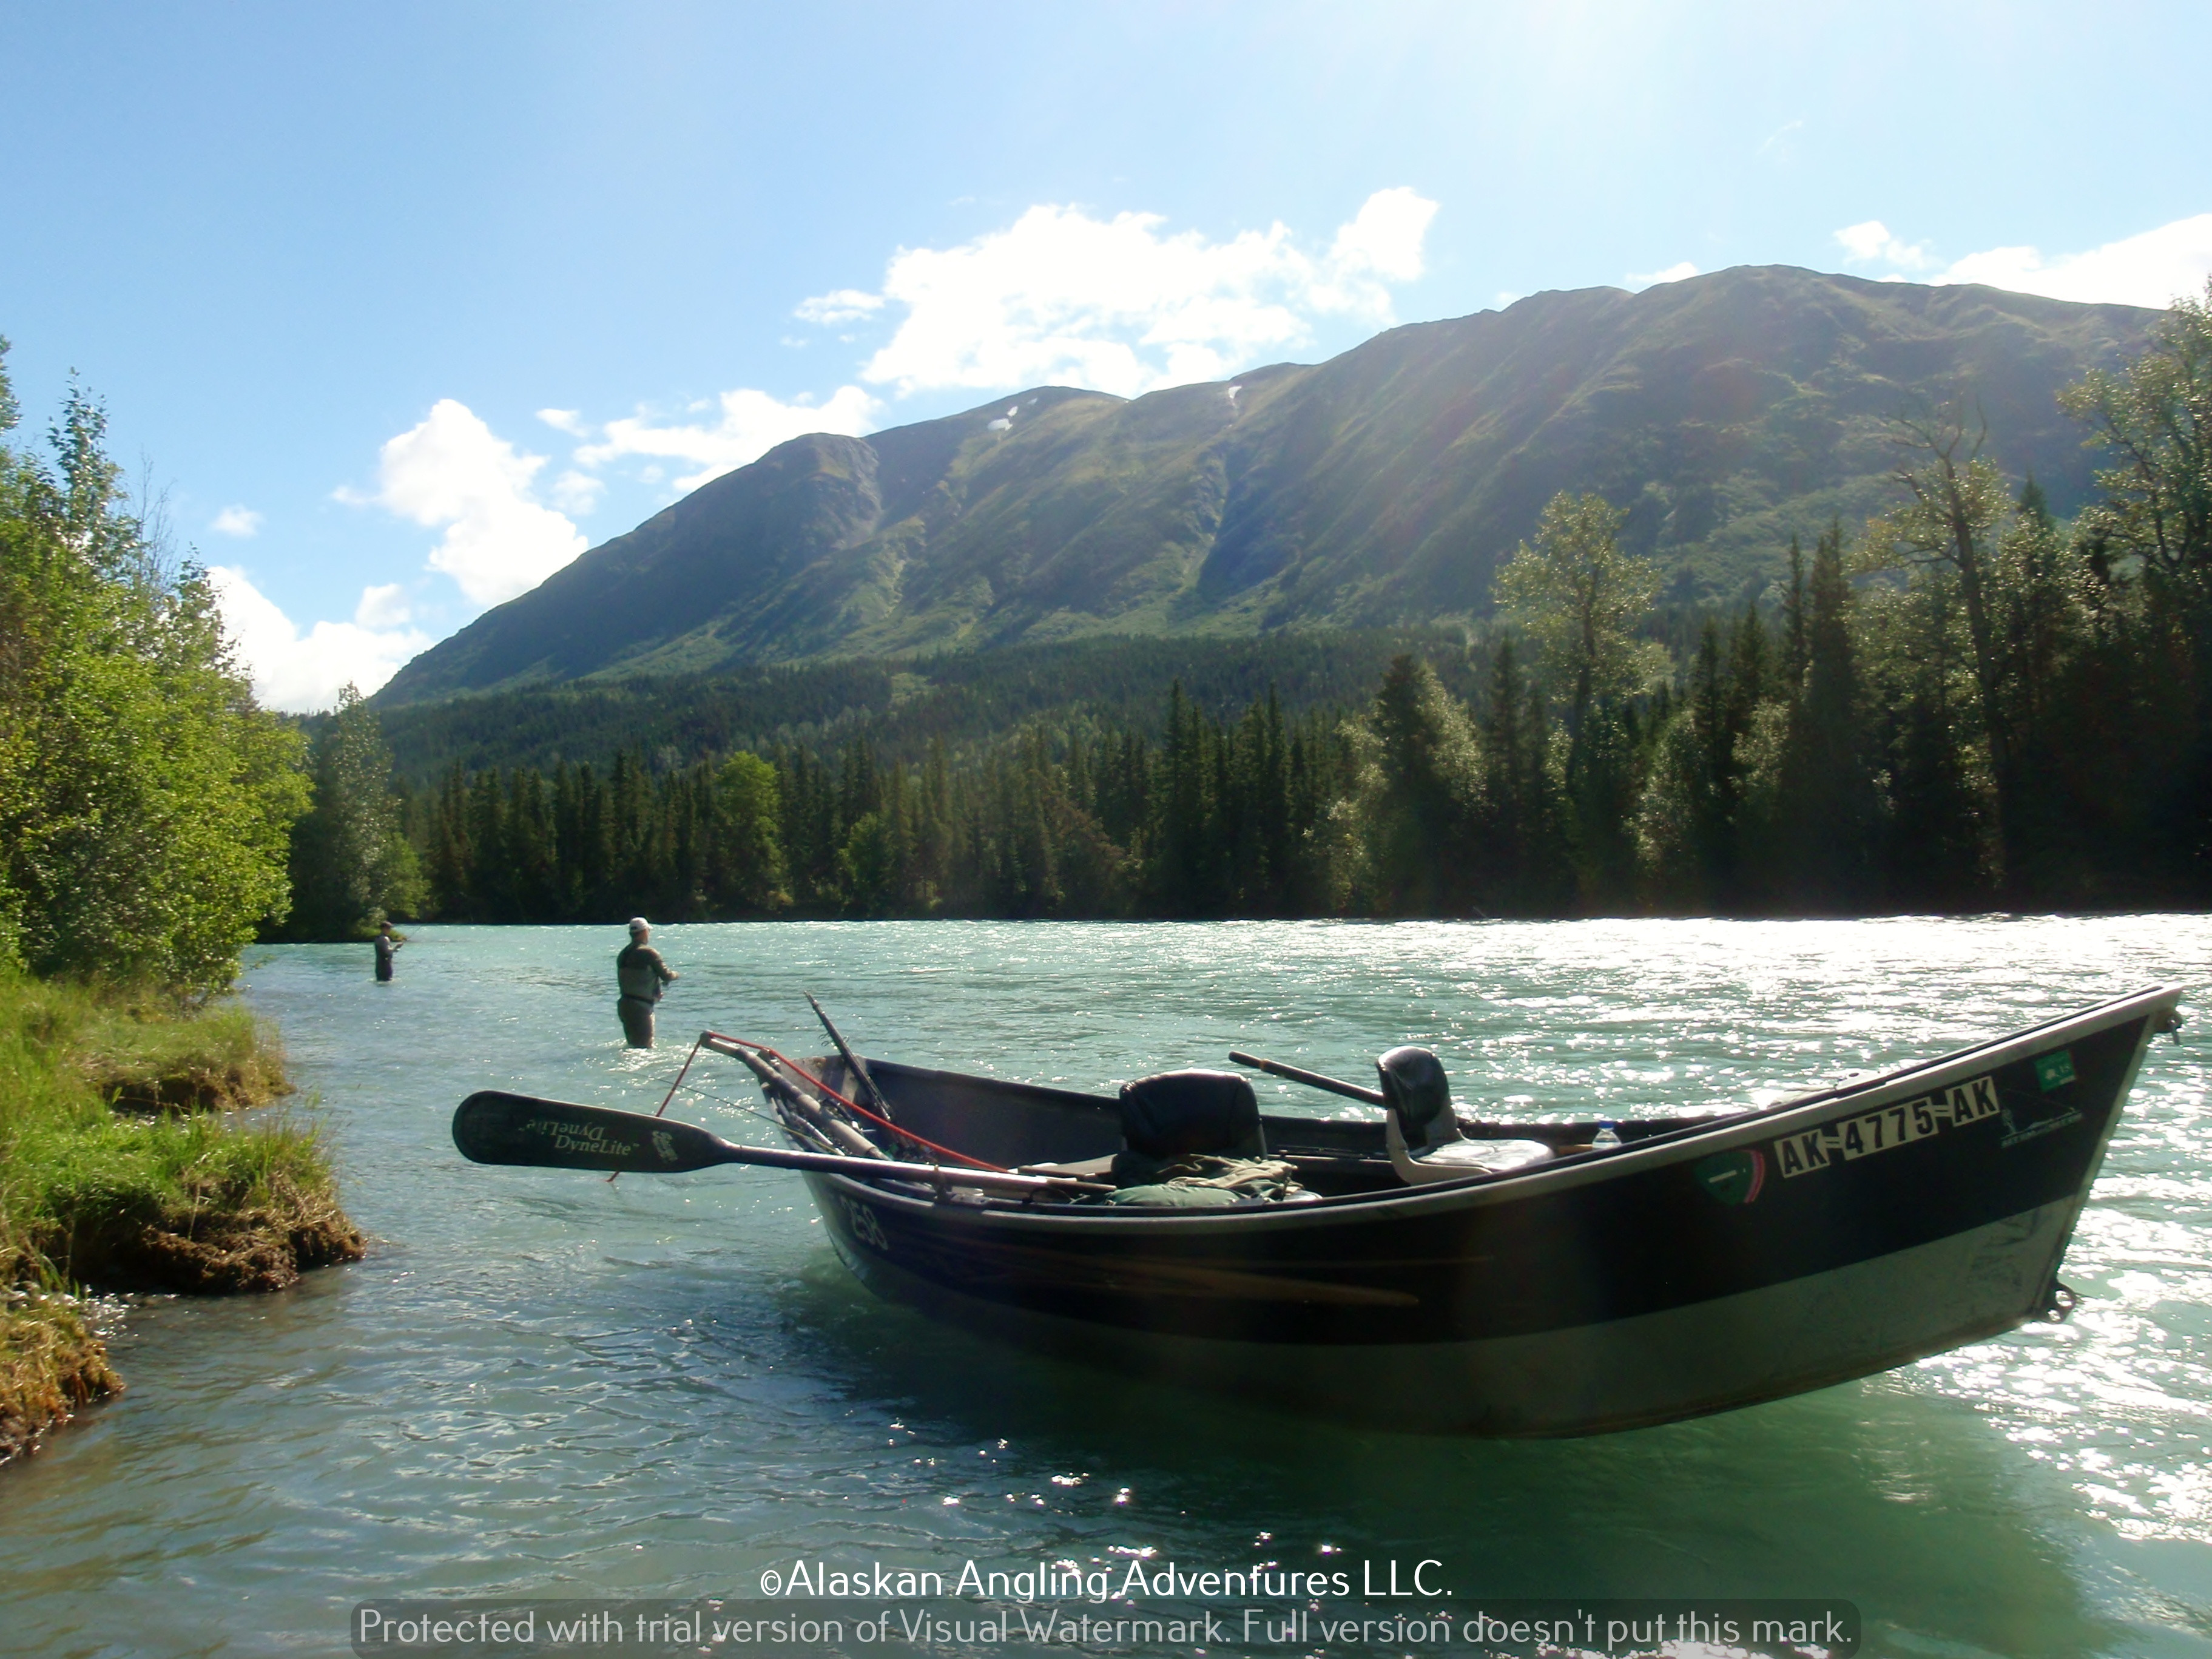 Alaskan Angling Adventures Llc.: Half Day Upper Kenai River Fishing Trip